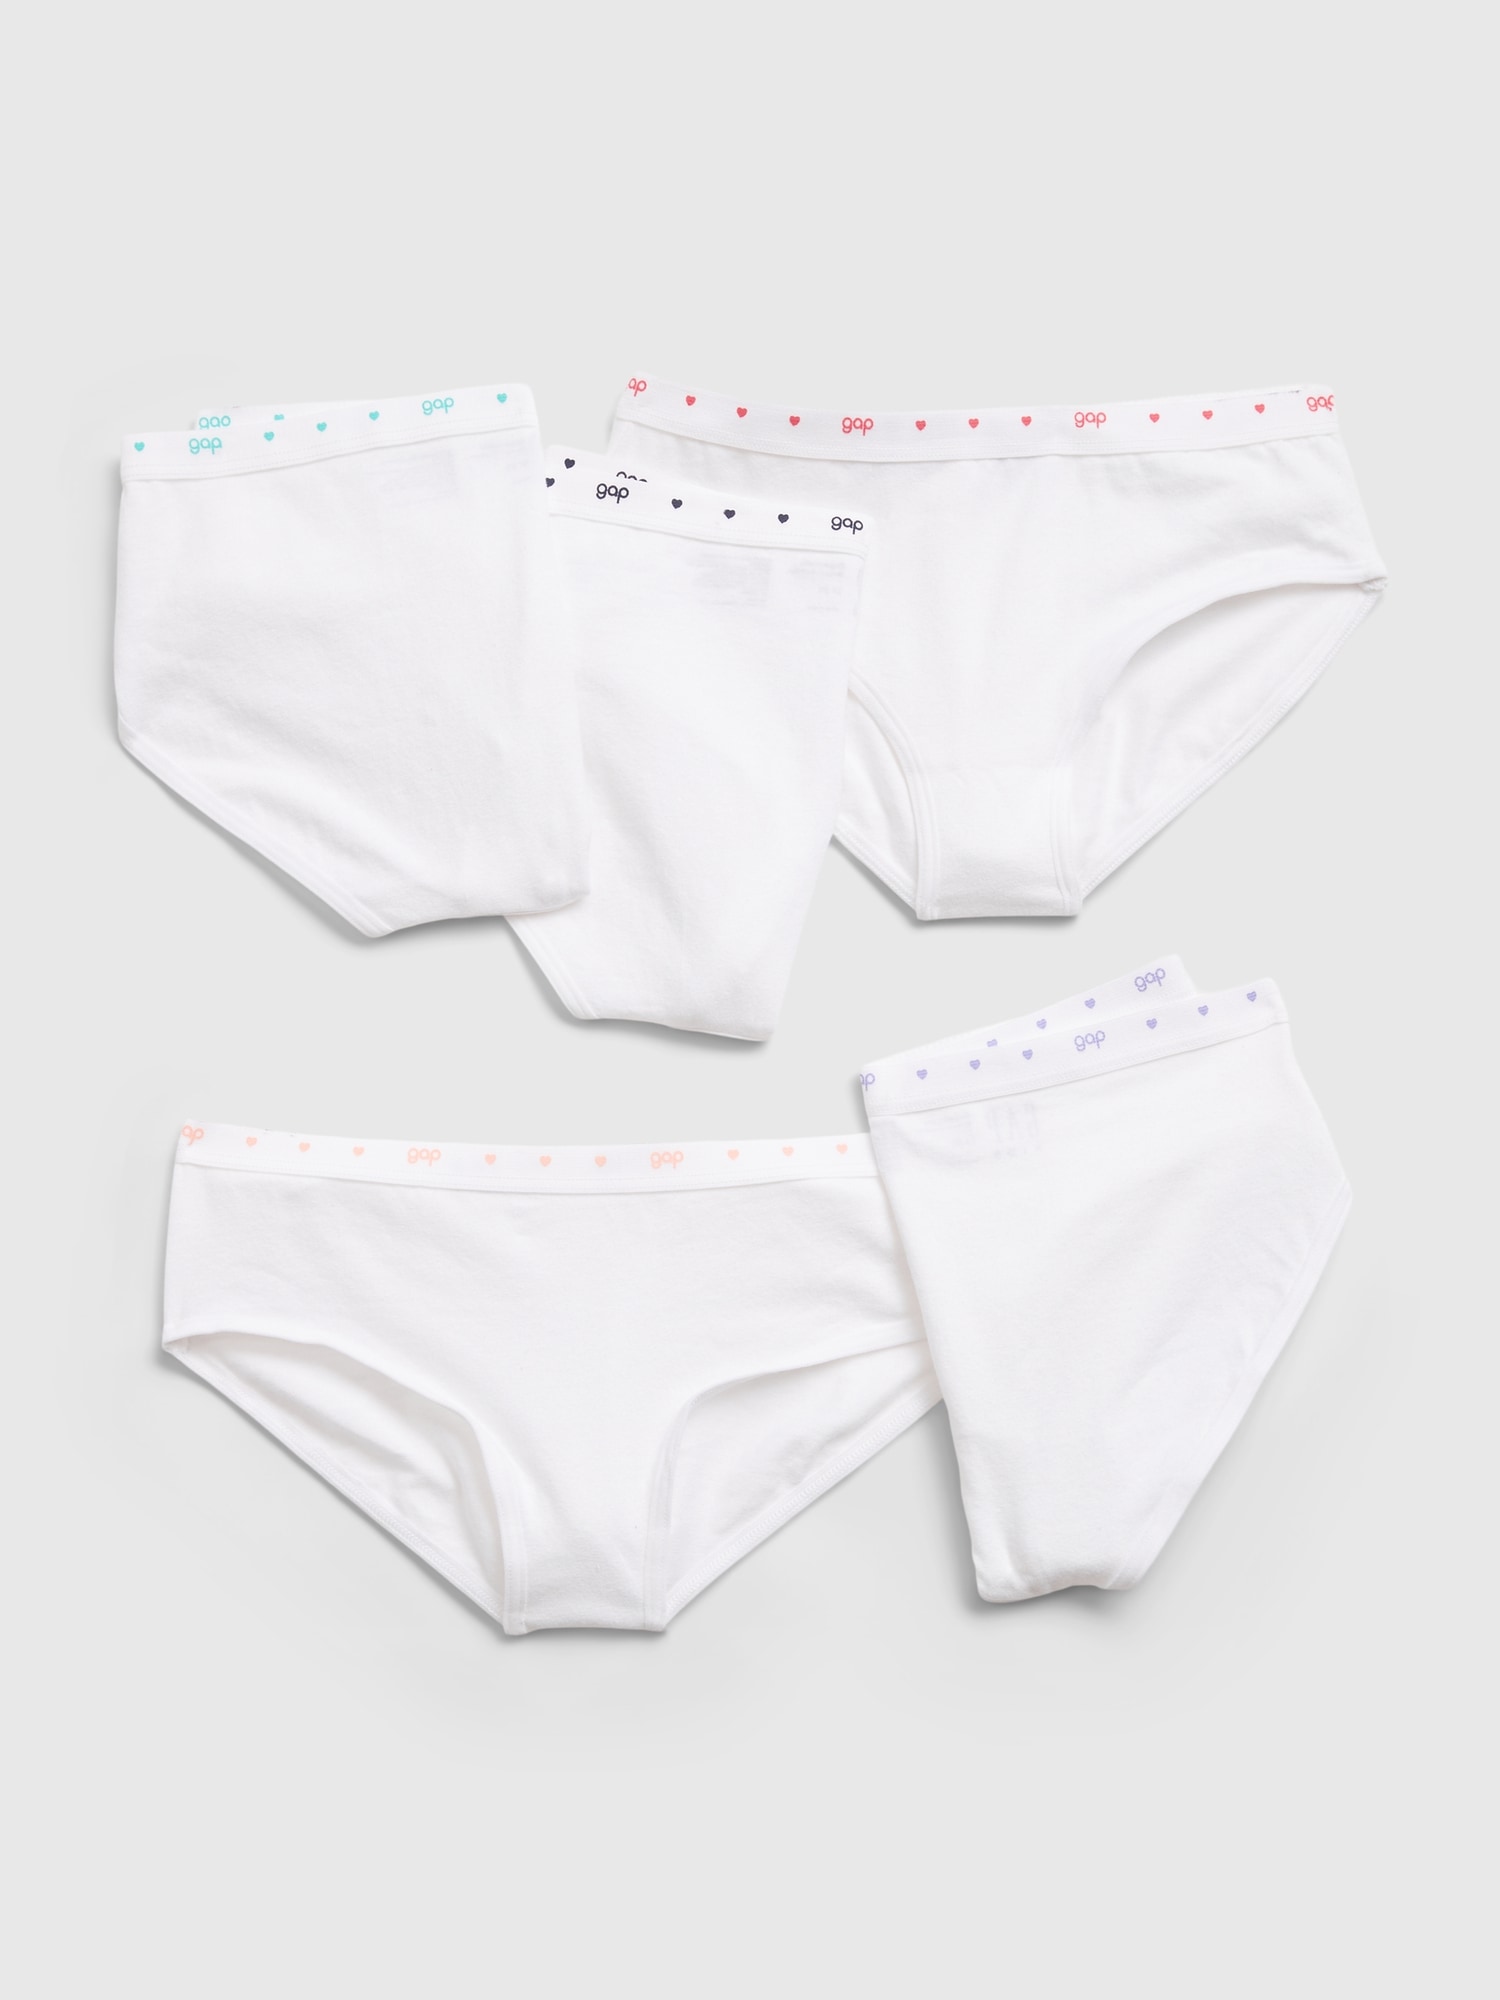 3 Pairs Girls Bikini Briefs Quality 100% Cotton Kids Underwear Plain Colour